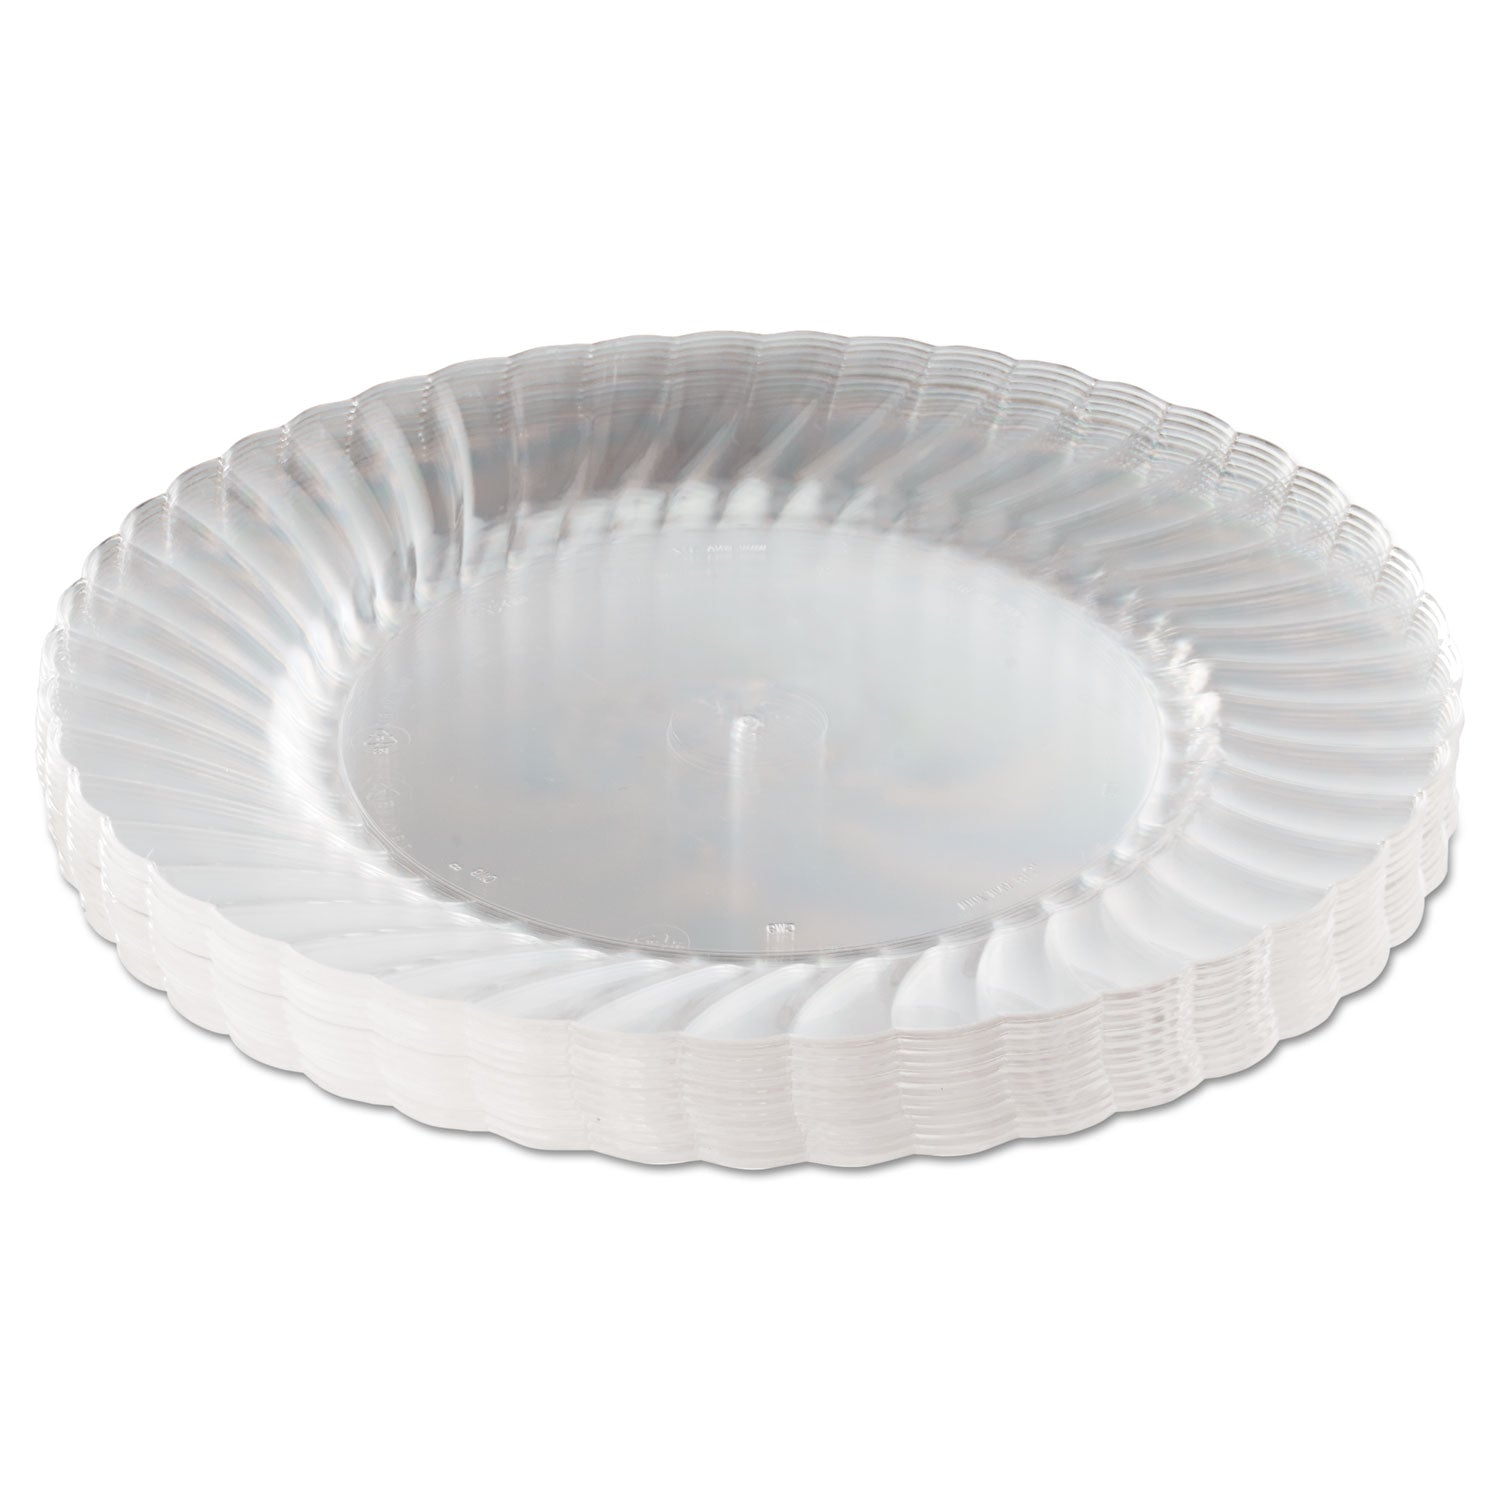 Classicware Plastic Plates, 9" dia, Clear, 12 Plates/Pack - 